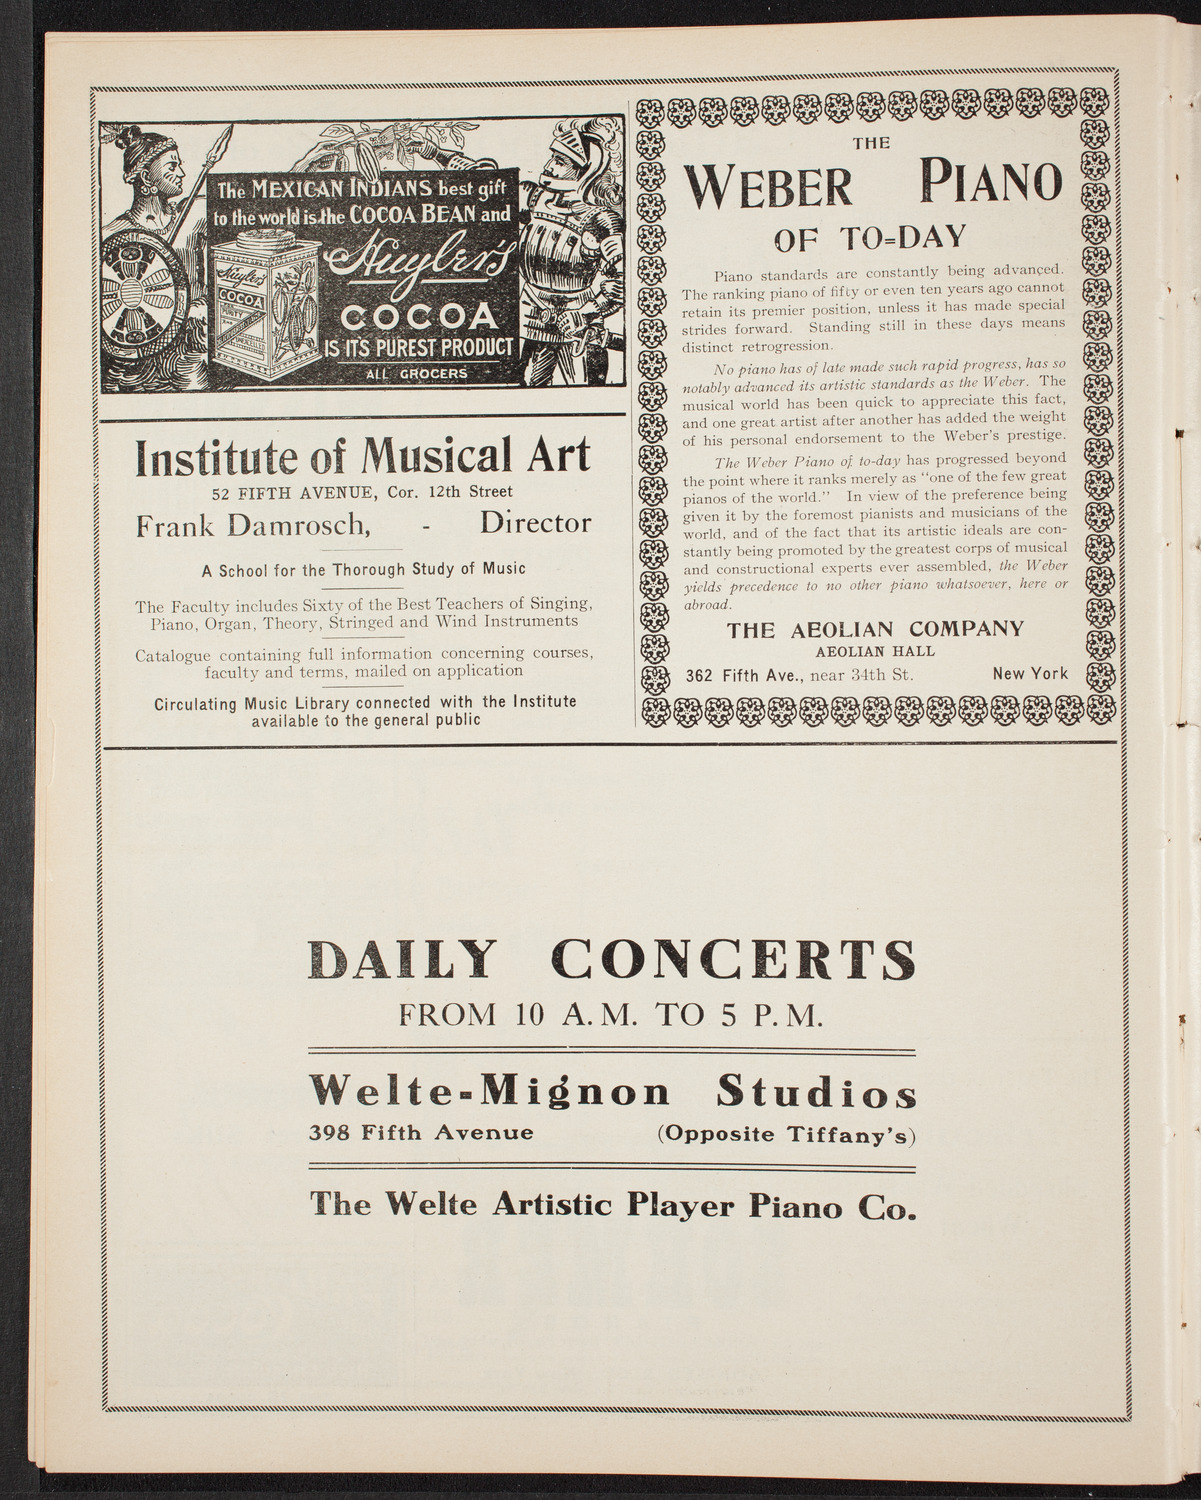 Rhondda Valley Male Concert Party, October 7, 1907, program page 6